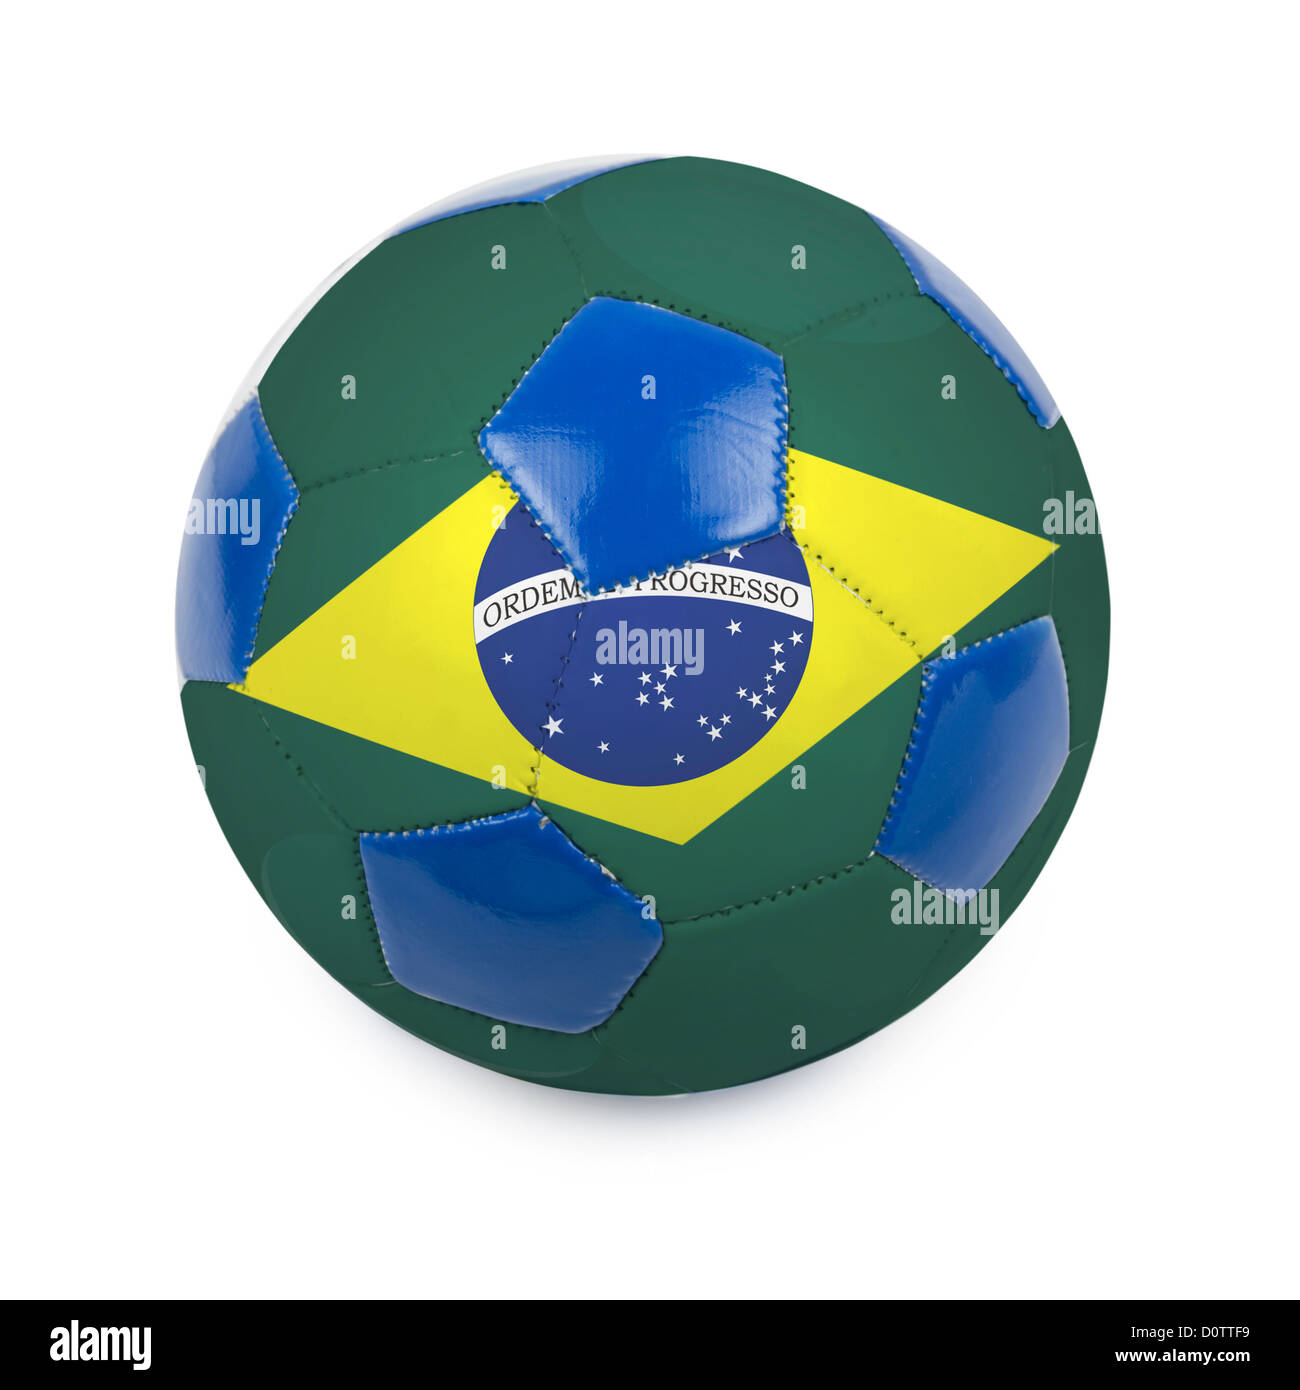 brazil soccer ball Stock Photo - Alamy